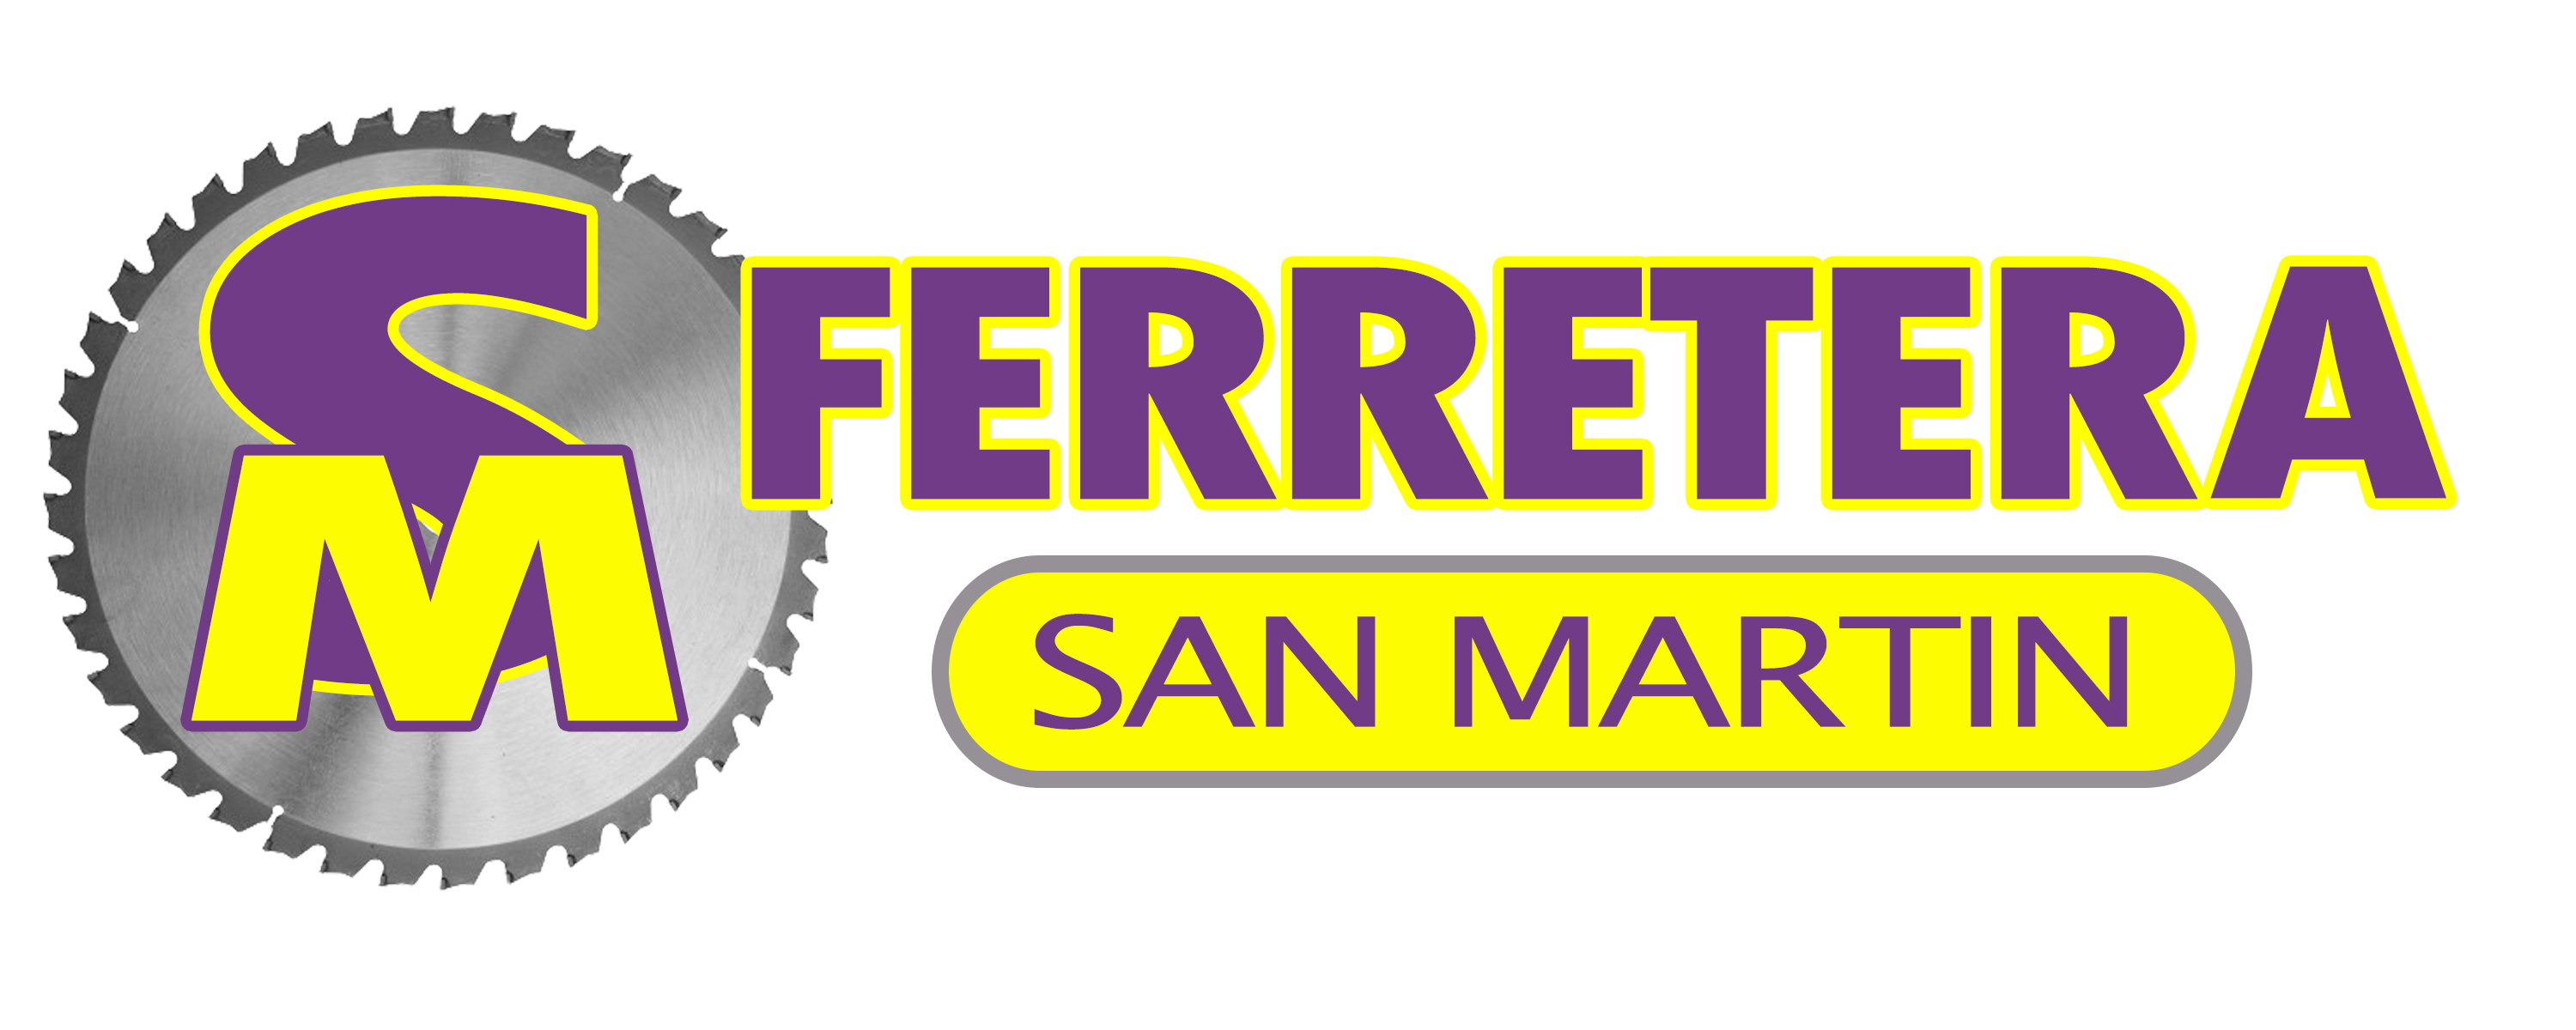 Ferretería San Martin - www.fsm.mx -